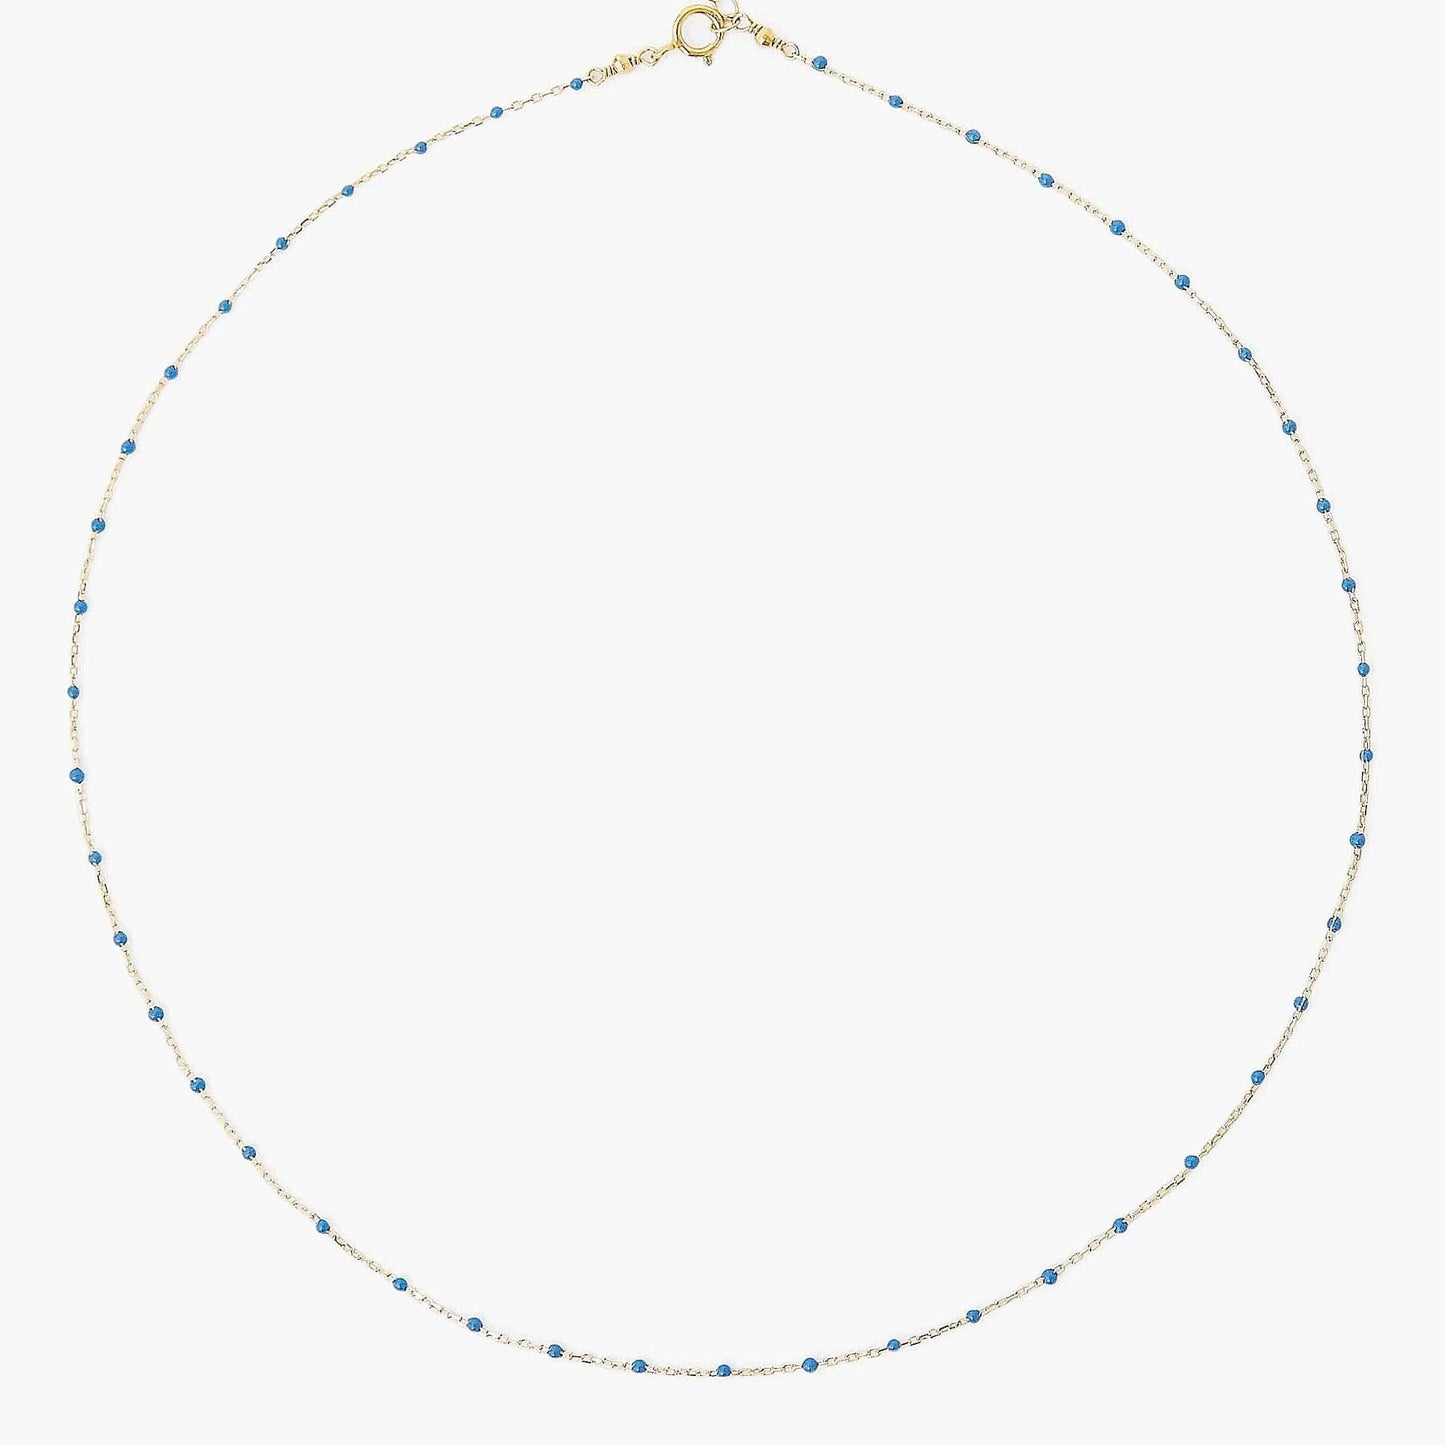 NKL-GPL Stone Blue Enamel Bead Necklace